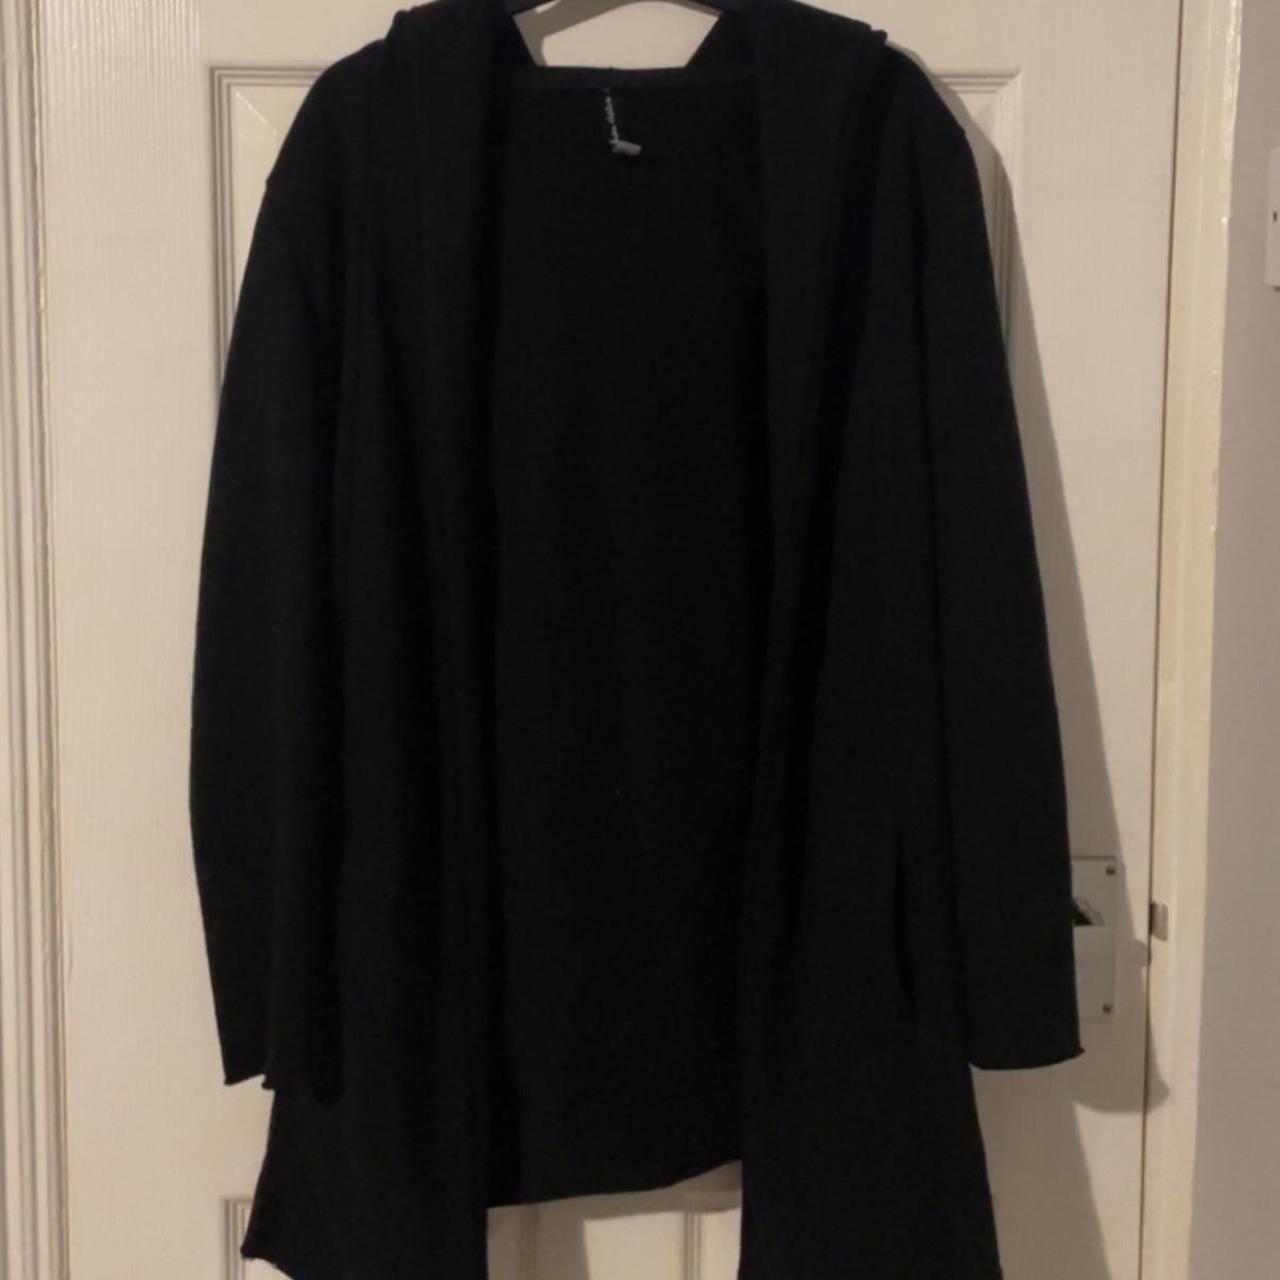 Gothic oversized black cloak/cardigan with hood ... - Depop